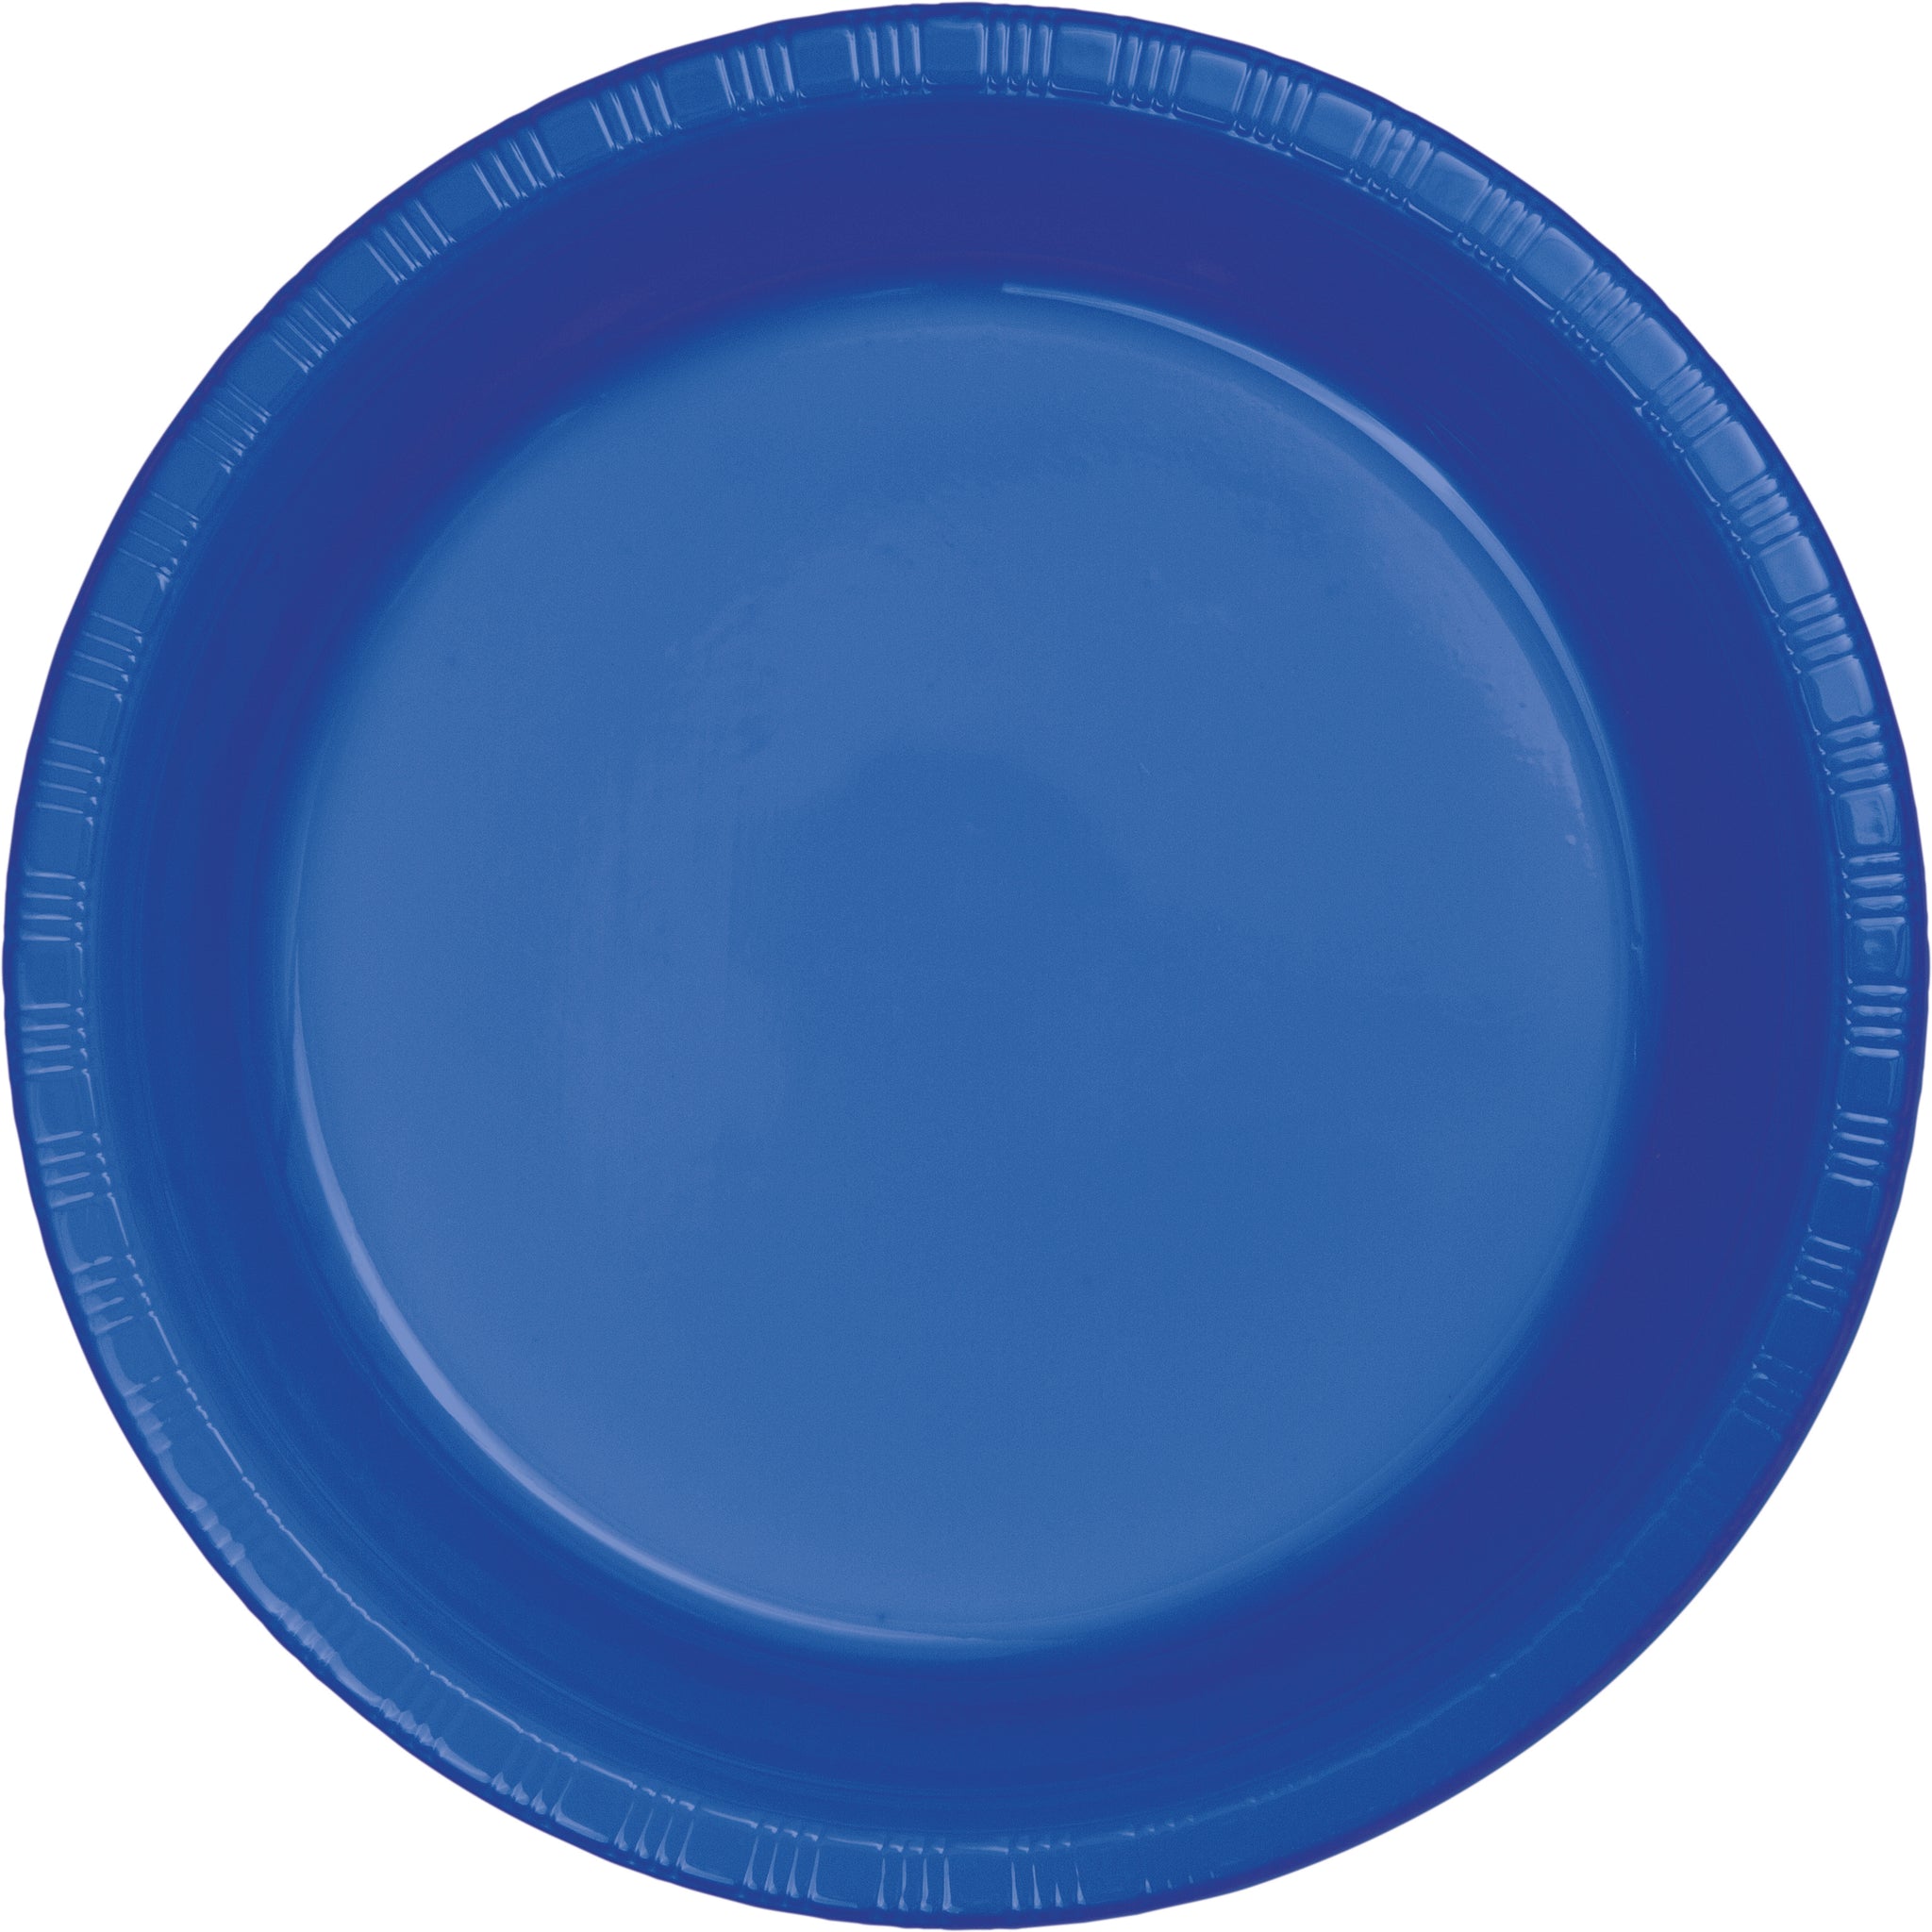 Cobalt Blue Plastic 10in Dinner Plates 20ct | Solids